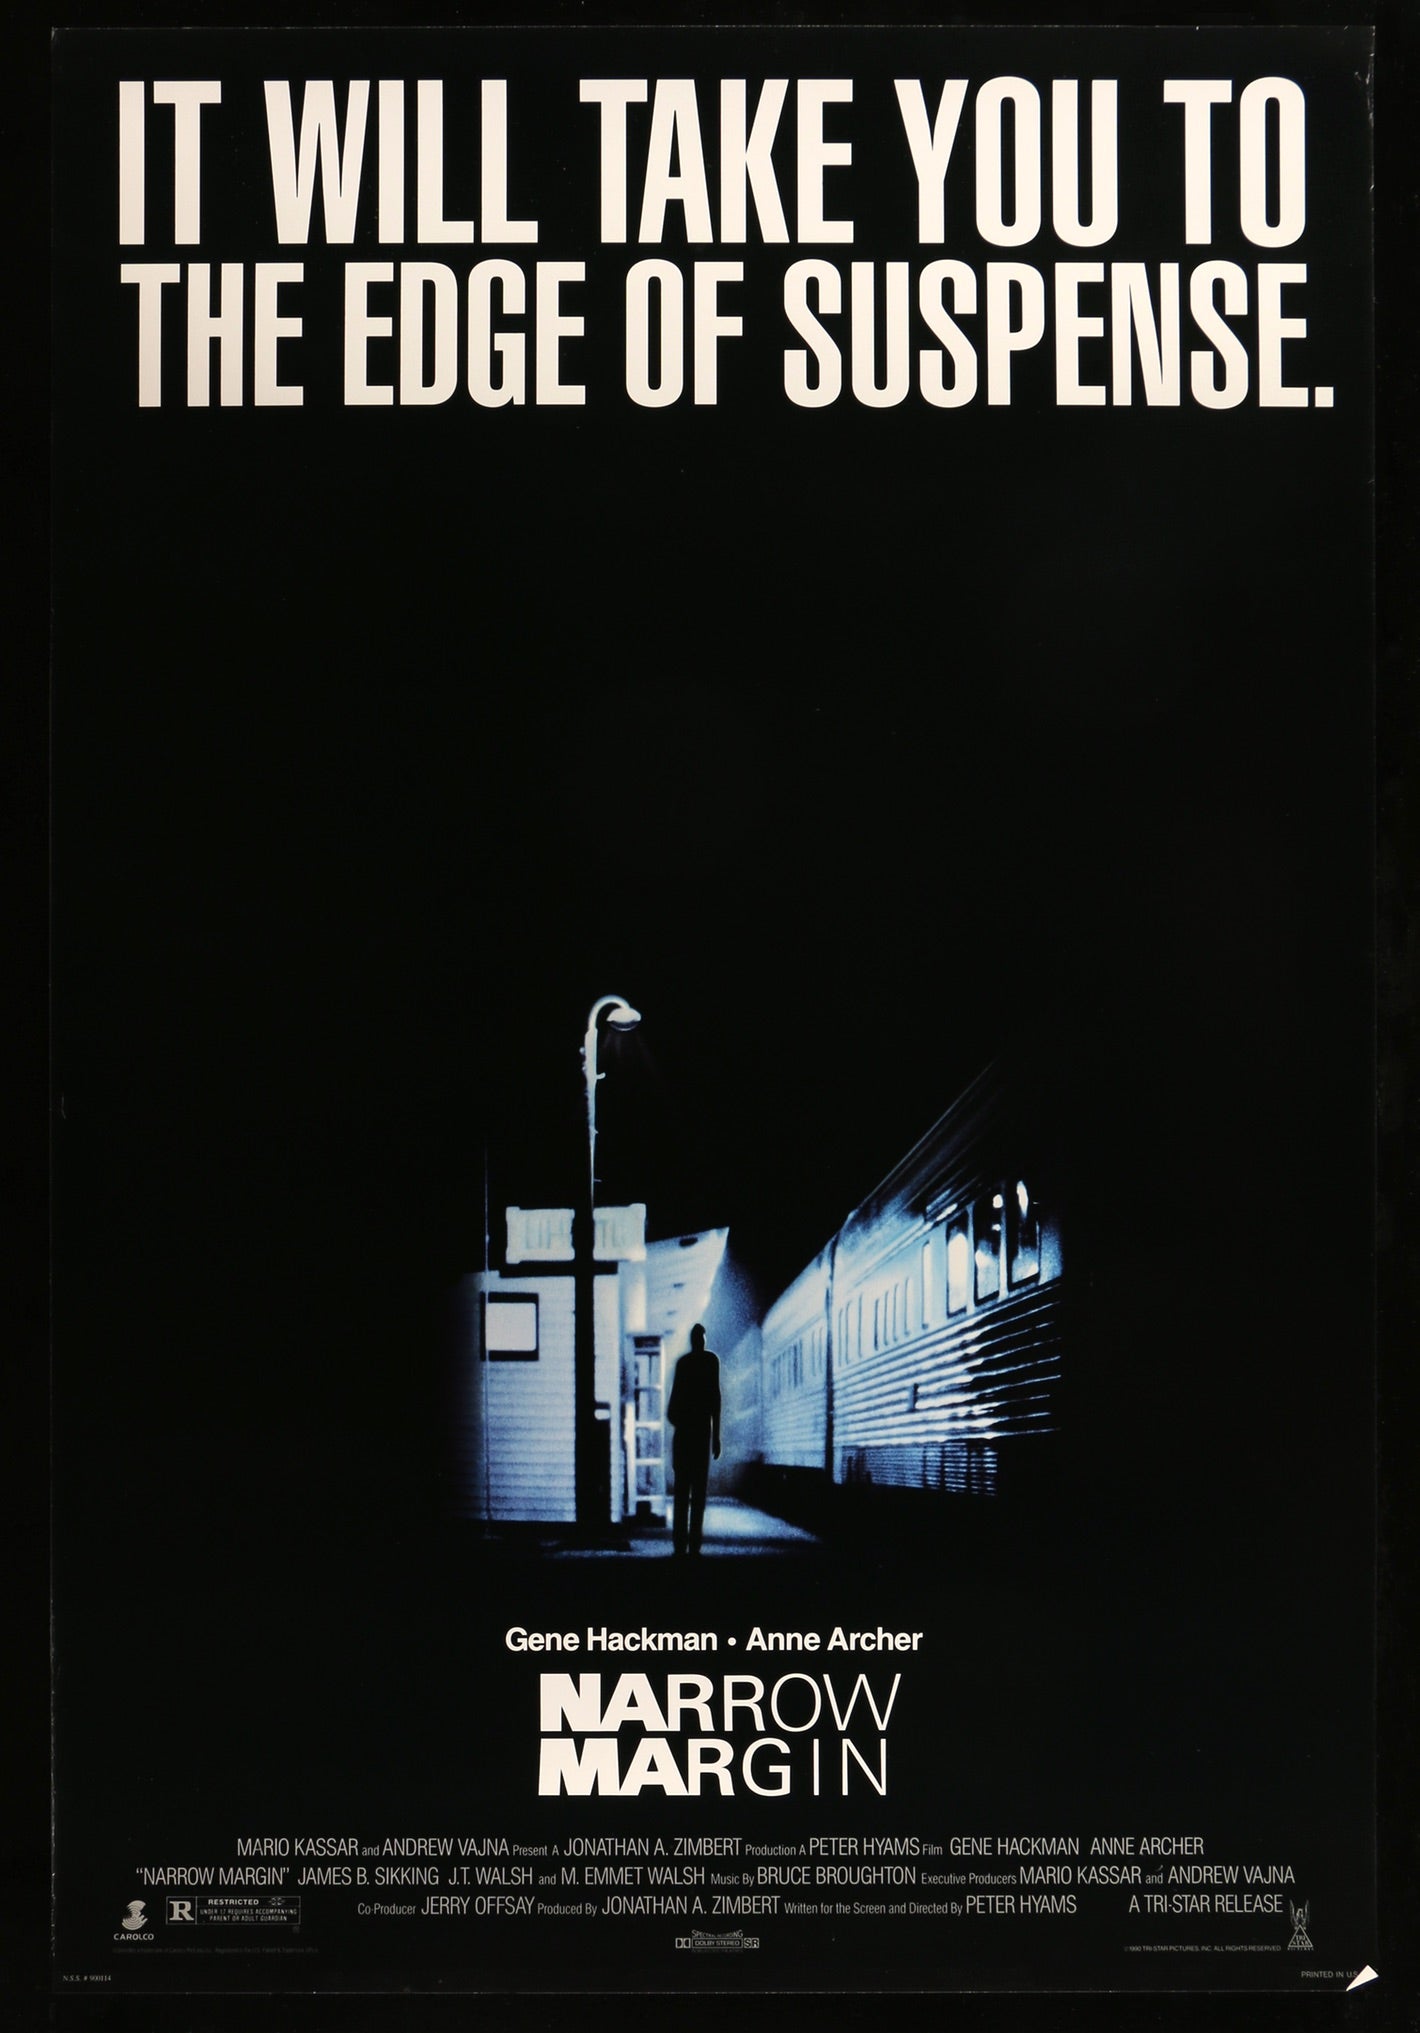 Narrow Margin (1990) original movie poster for sale at Original Film Art